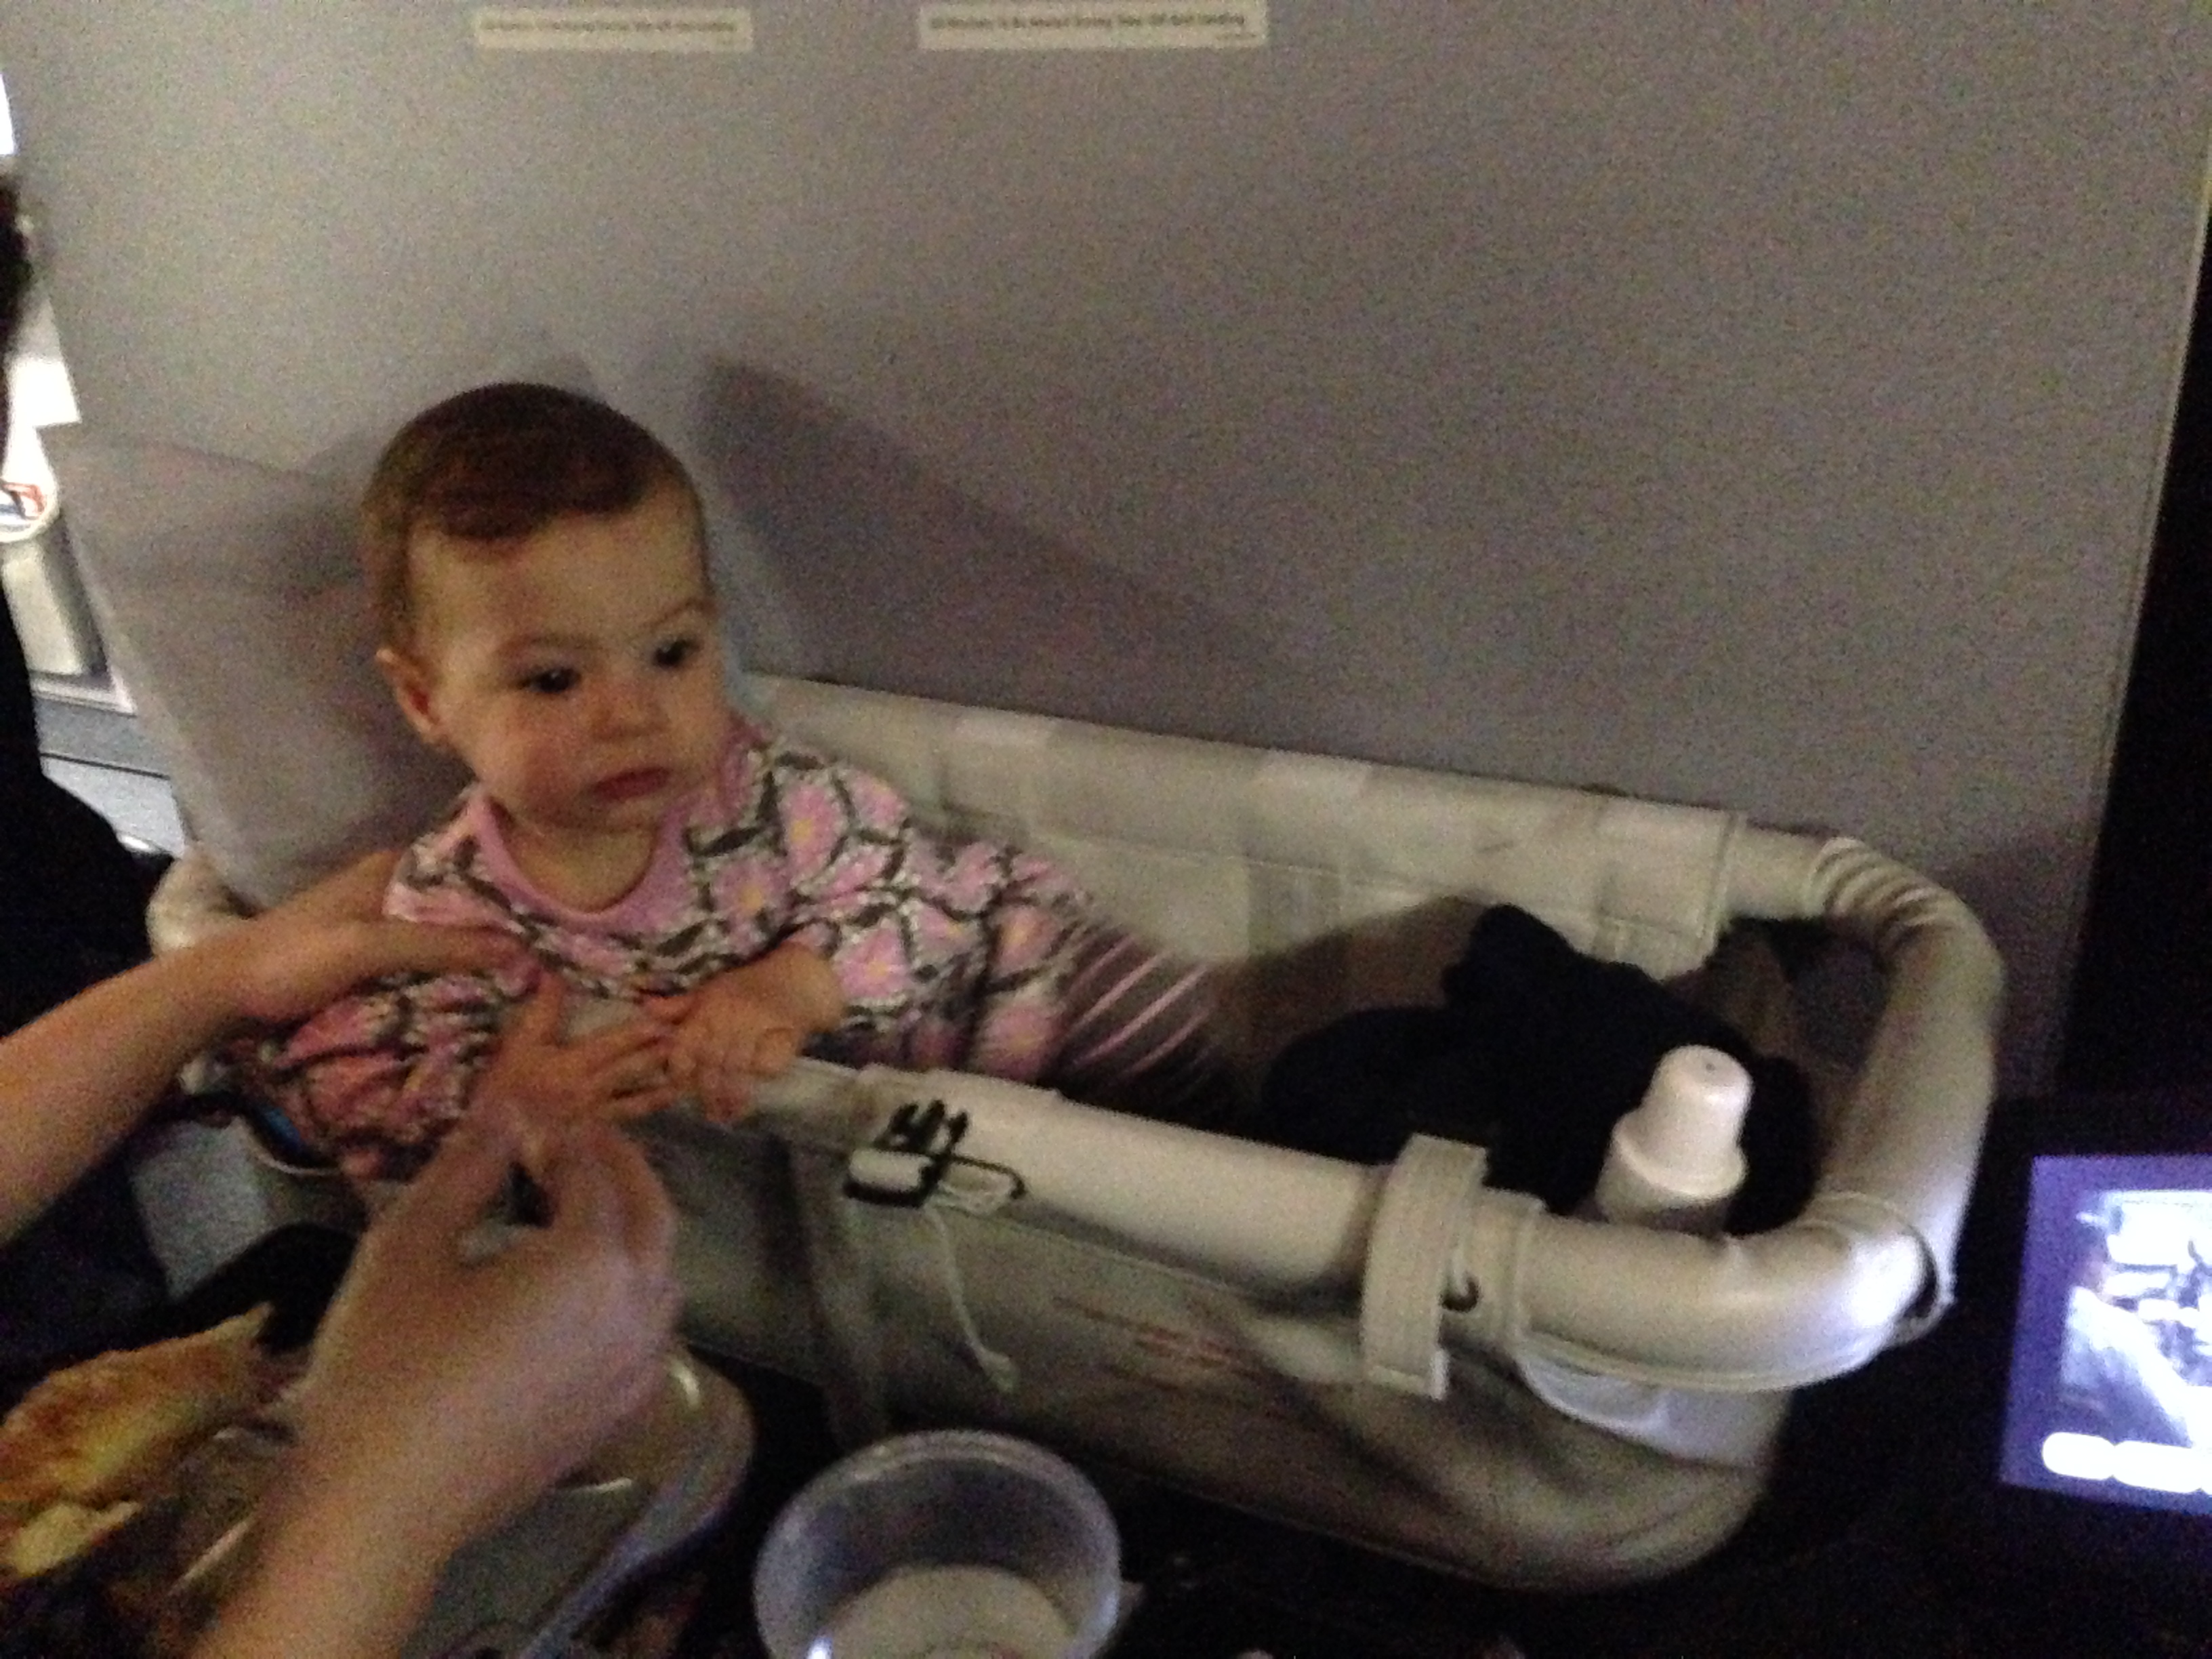 airplane baby bassinet